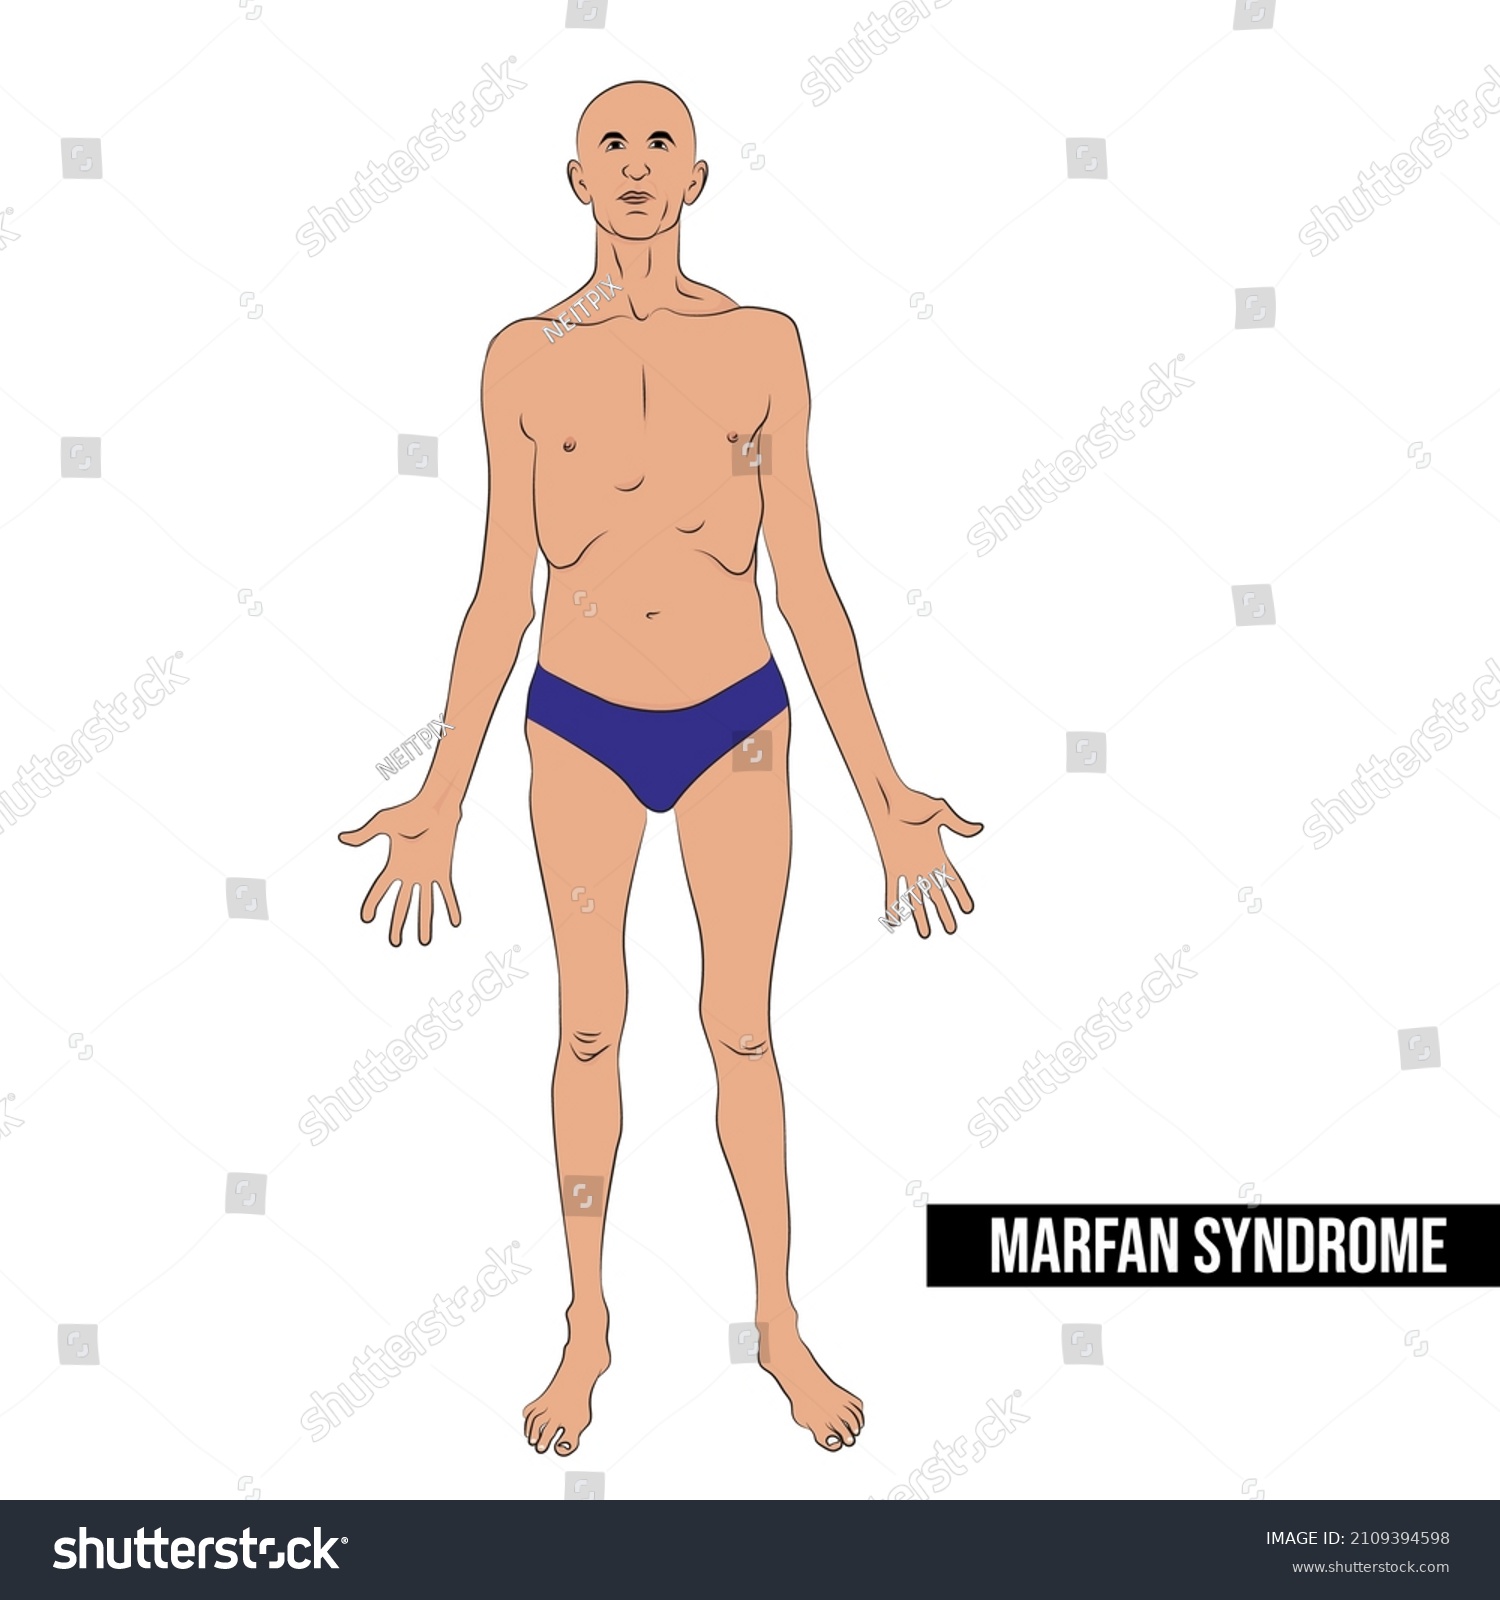 Marfan syndrome